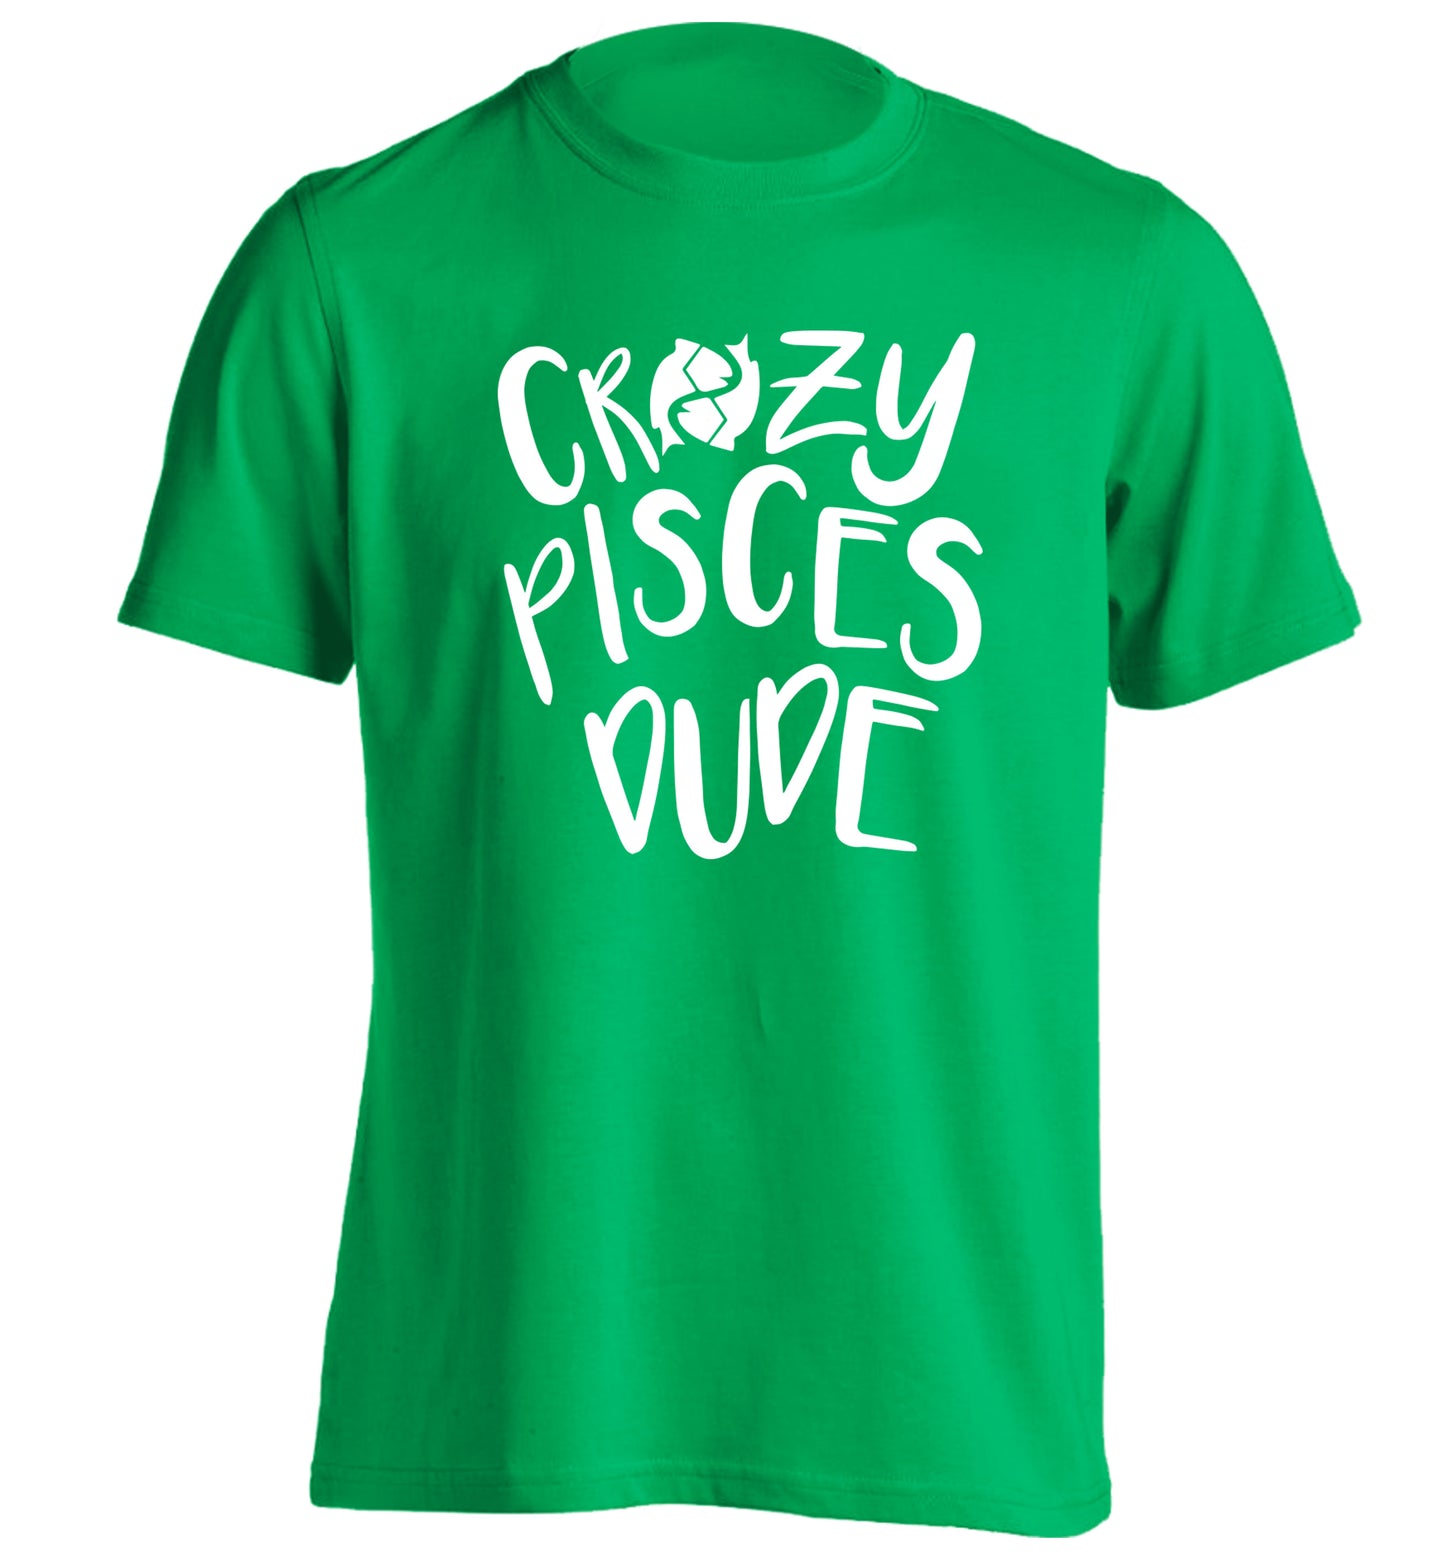 Crazy pisces dude adults unisex green Tshirt 2XL